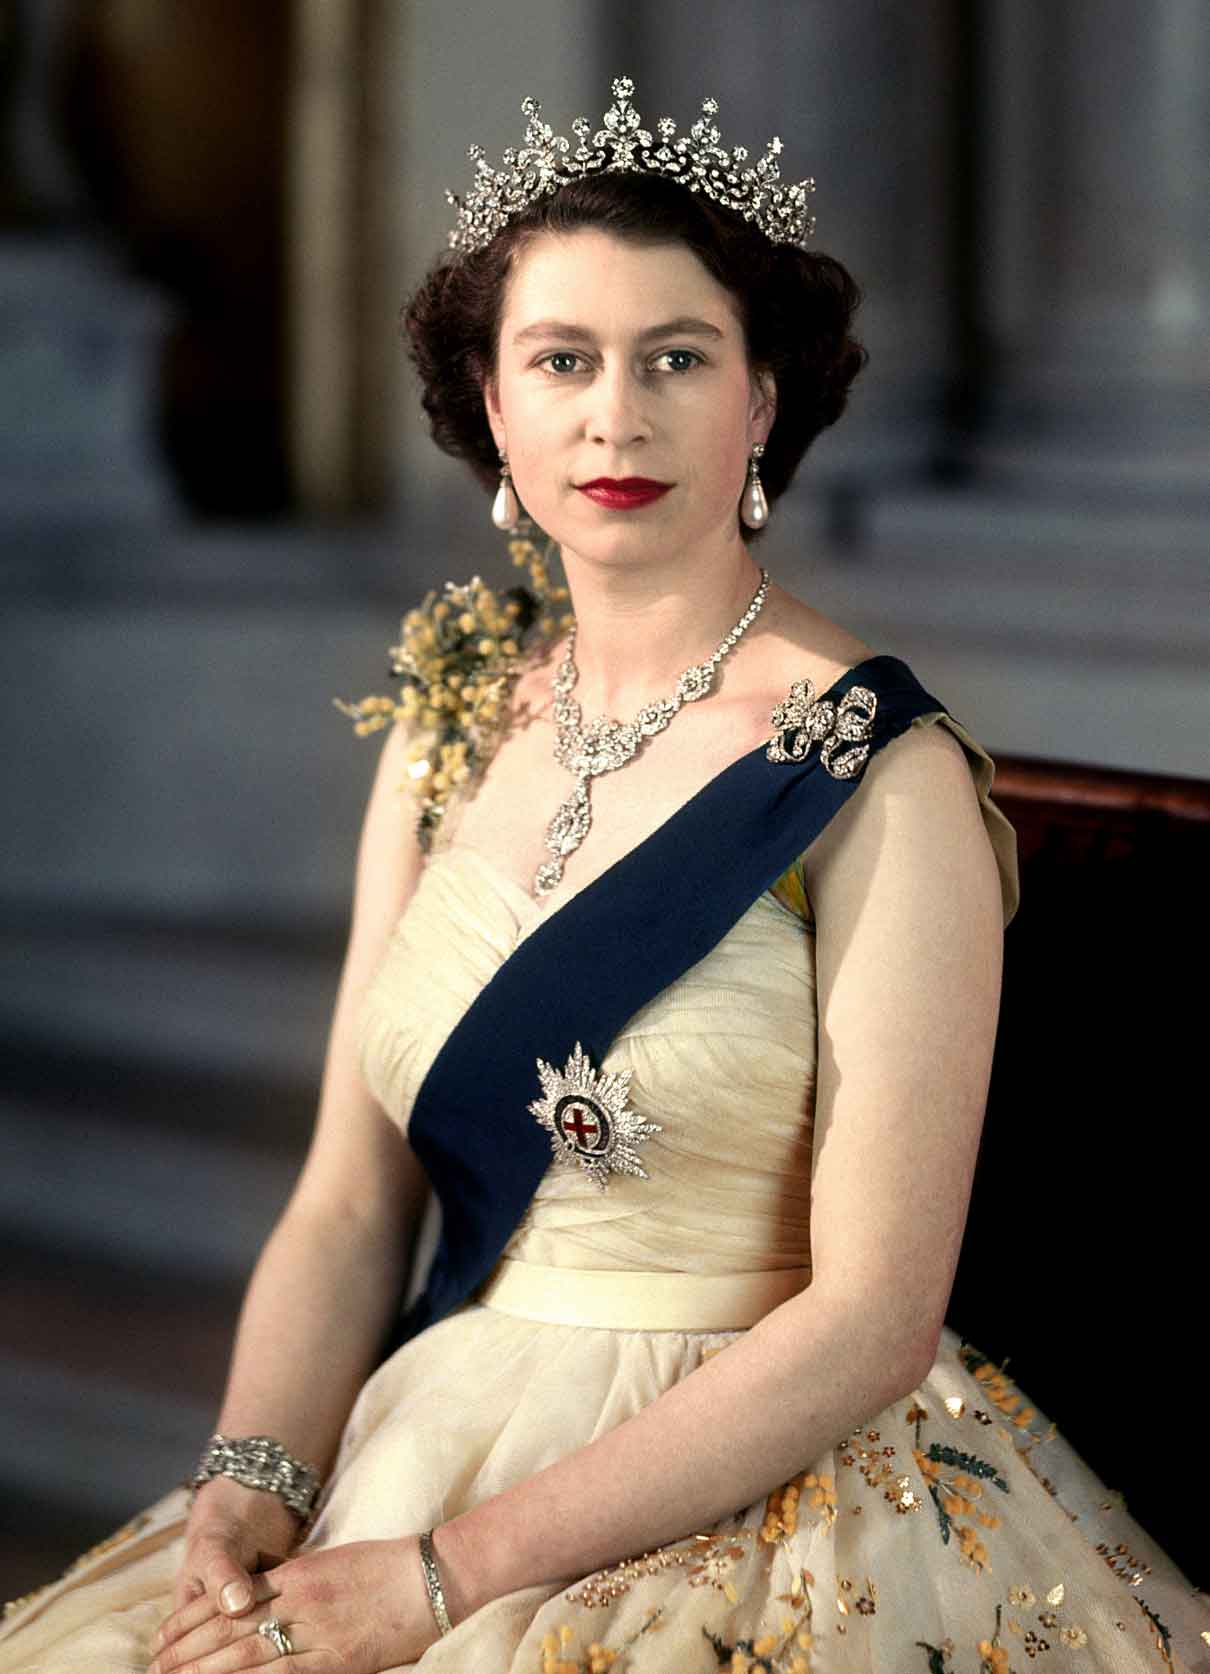 In Memoriam: Her Majesty Queen Elizabeth II (1926-2022)￼ - International  Churchill Society